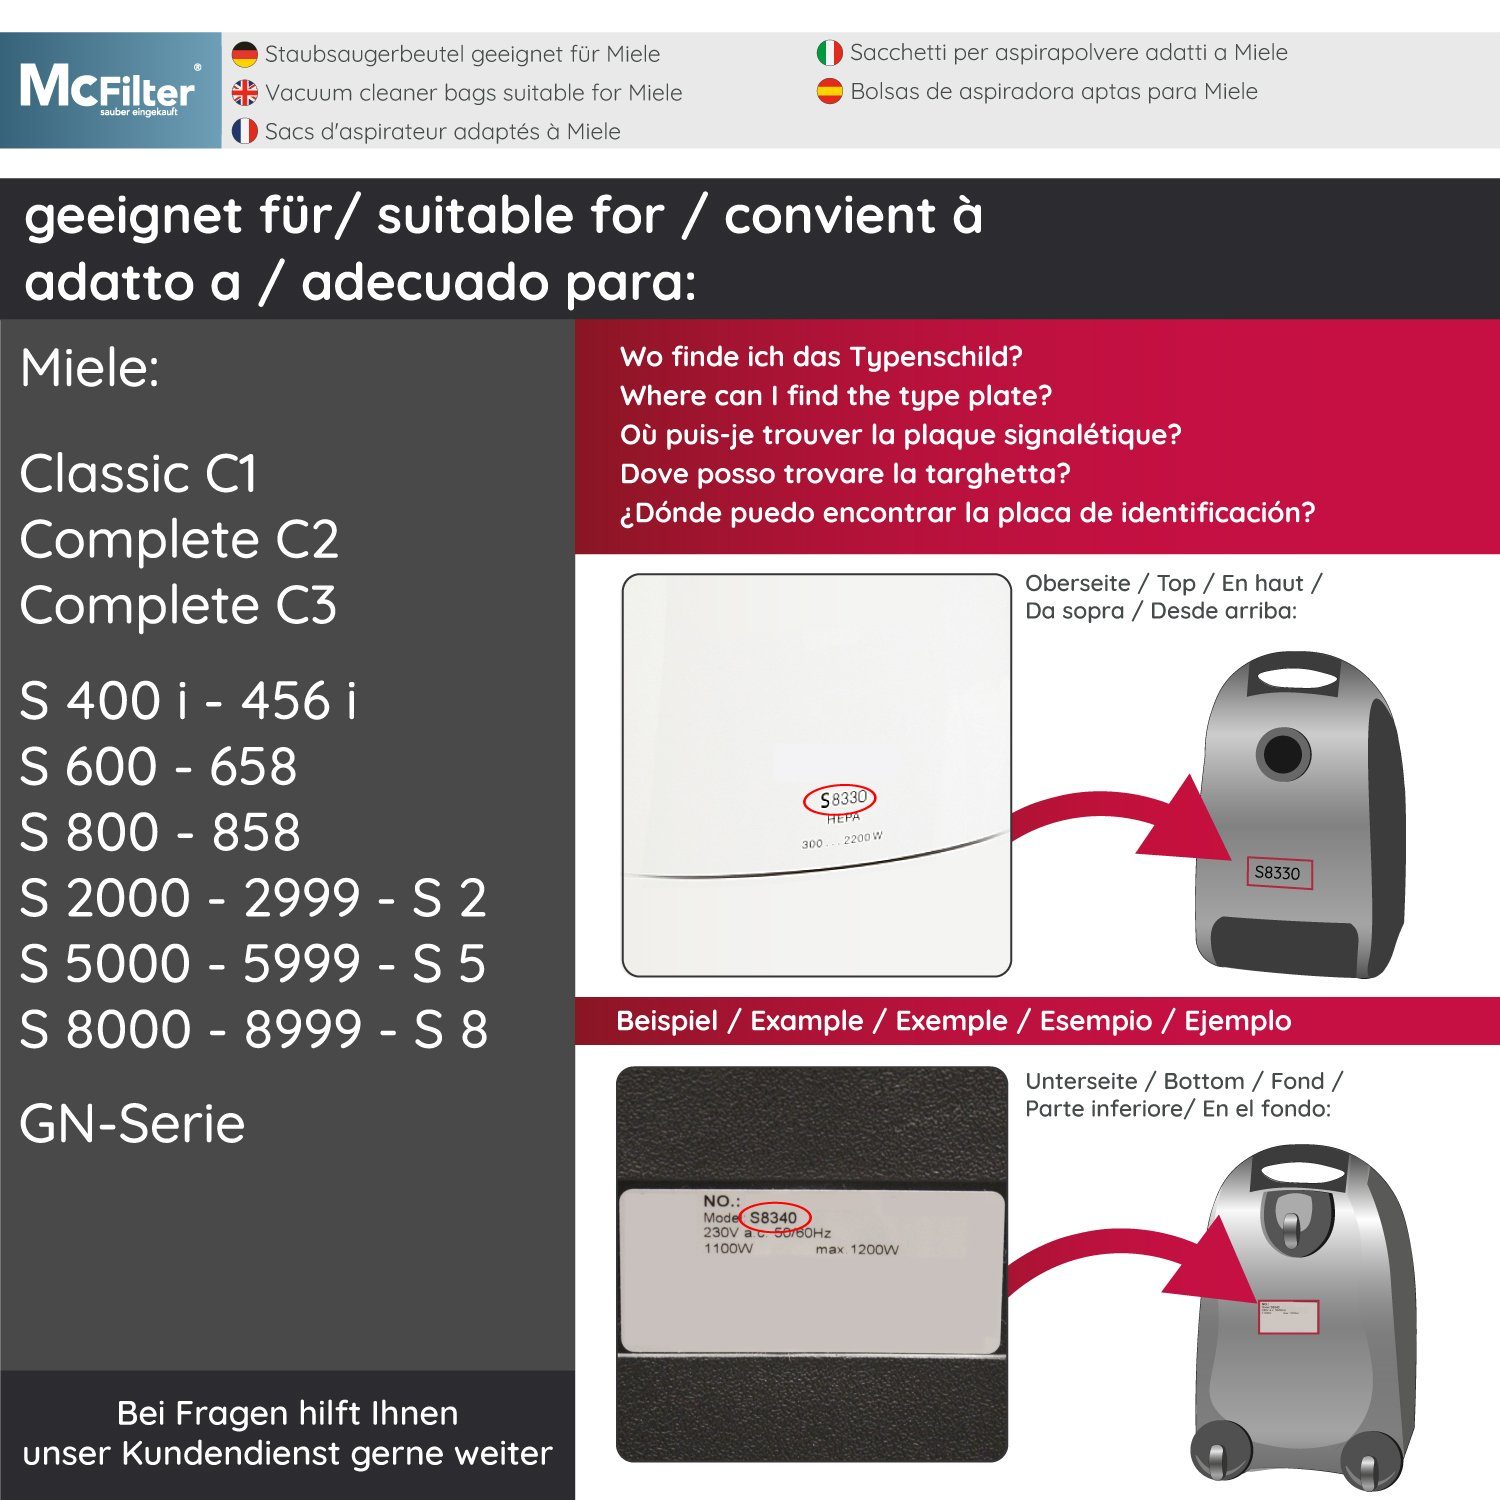 McFilter Staubsaugerbeutel >MAXI BOX< 10408410 - Serie passend 16 inkl. Top 9917730, St., S658 8 Miele für Filter, zu Miele wie Staubsauger, (16+8), S600 Alternative